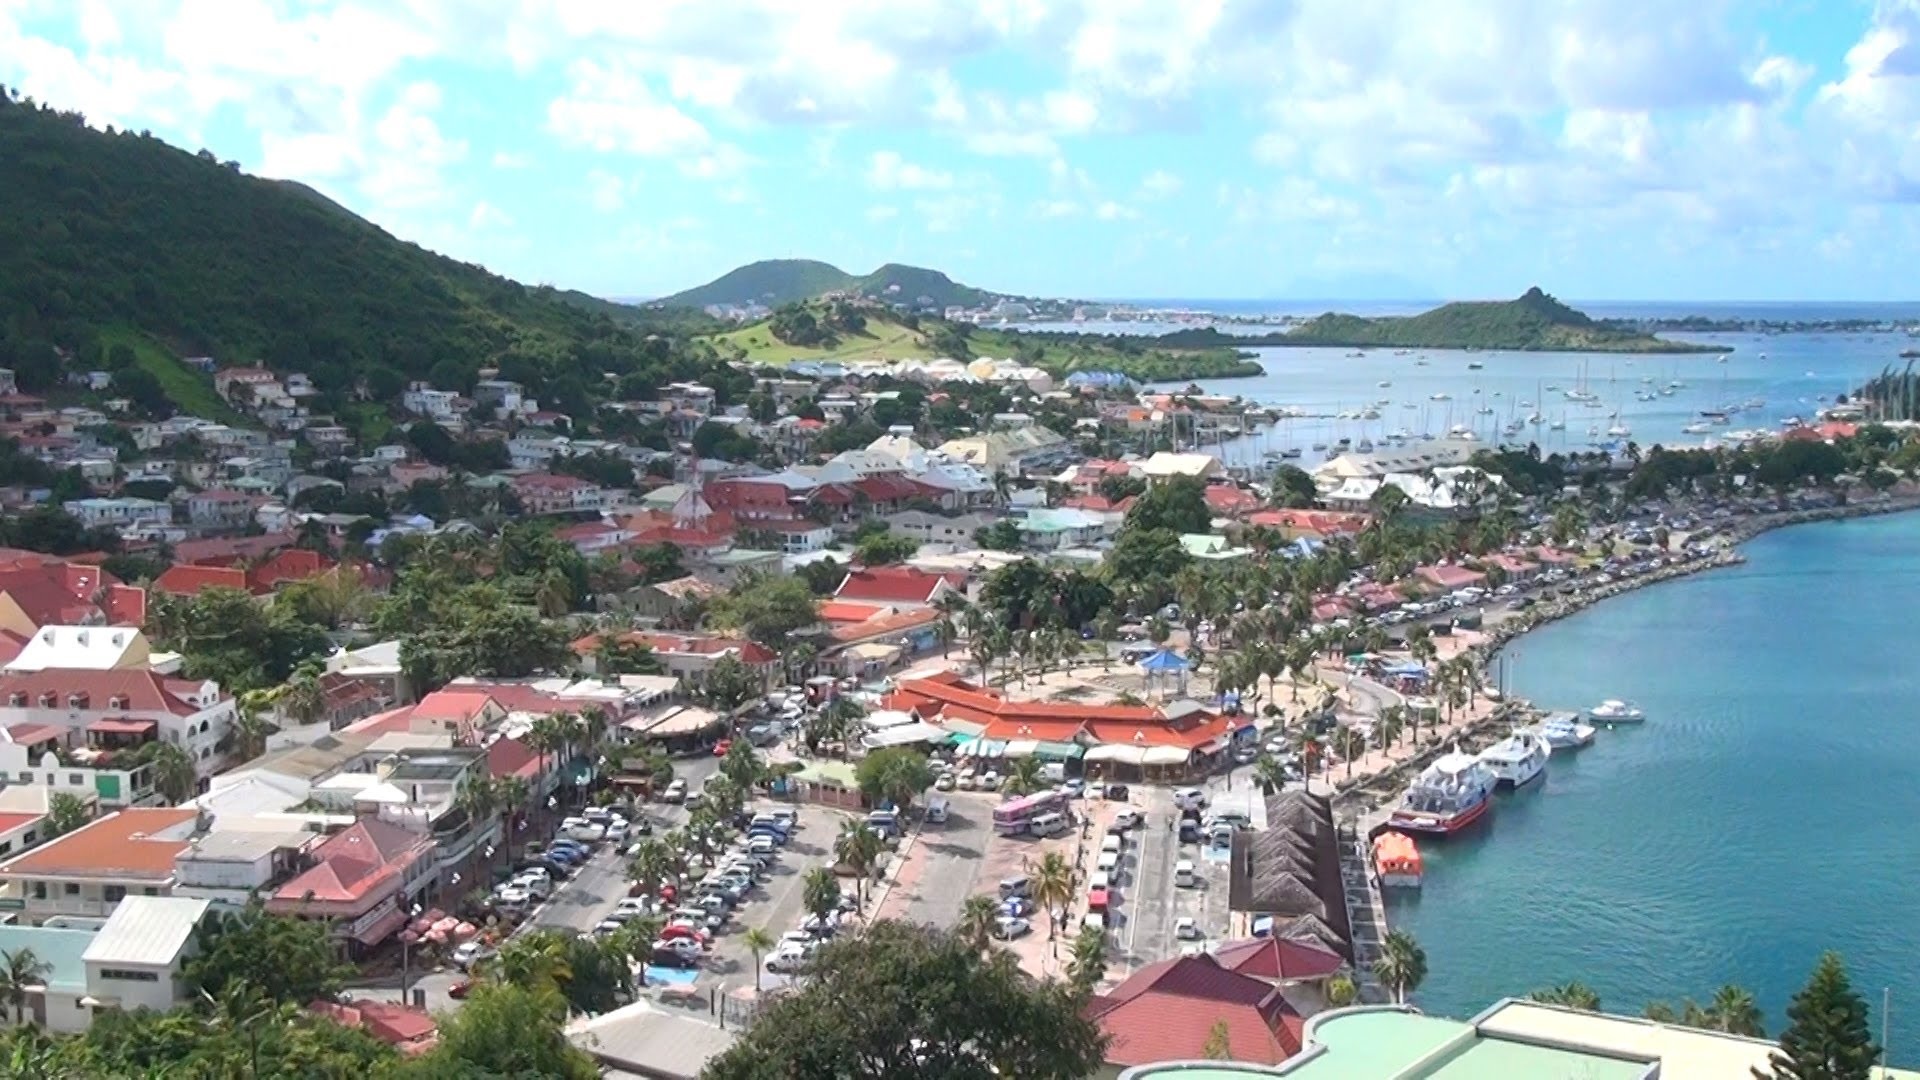 Sint Maarten, Airbnb partnership, MOU with the island, Tourism news, 1920x1080 Full HD Desktop